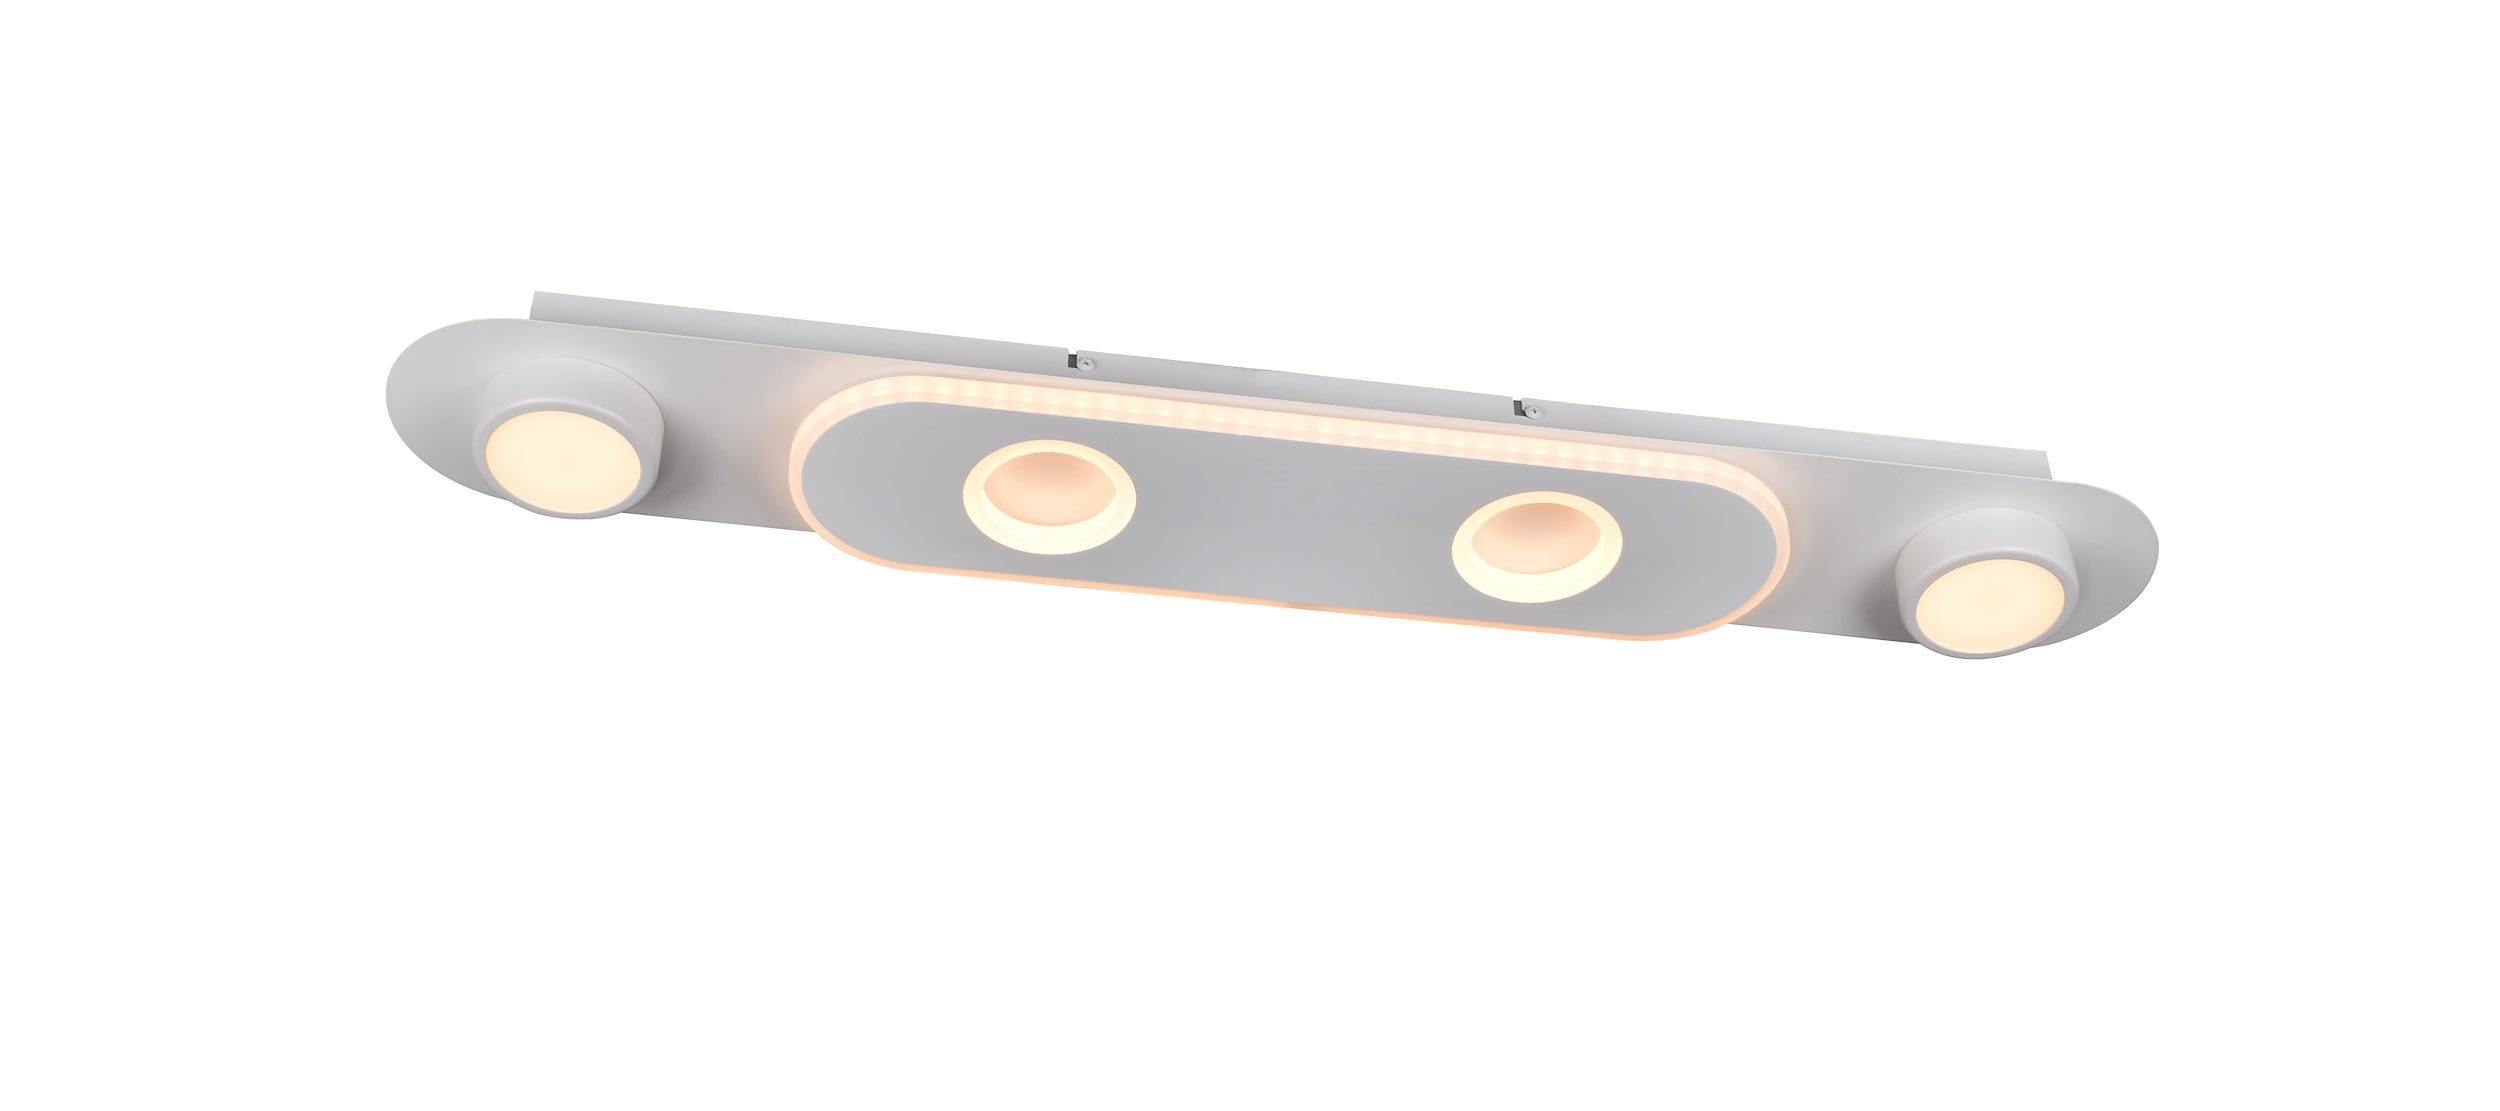 Brilliant Deckenleuchte Irelia, 30W 1x LED LED int weiß, 3000K, Lampe, Spotbalken Irelia LED integriert, 4flg